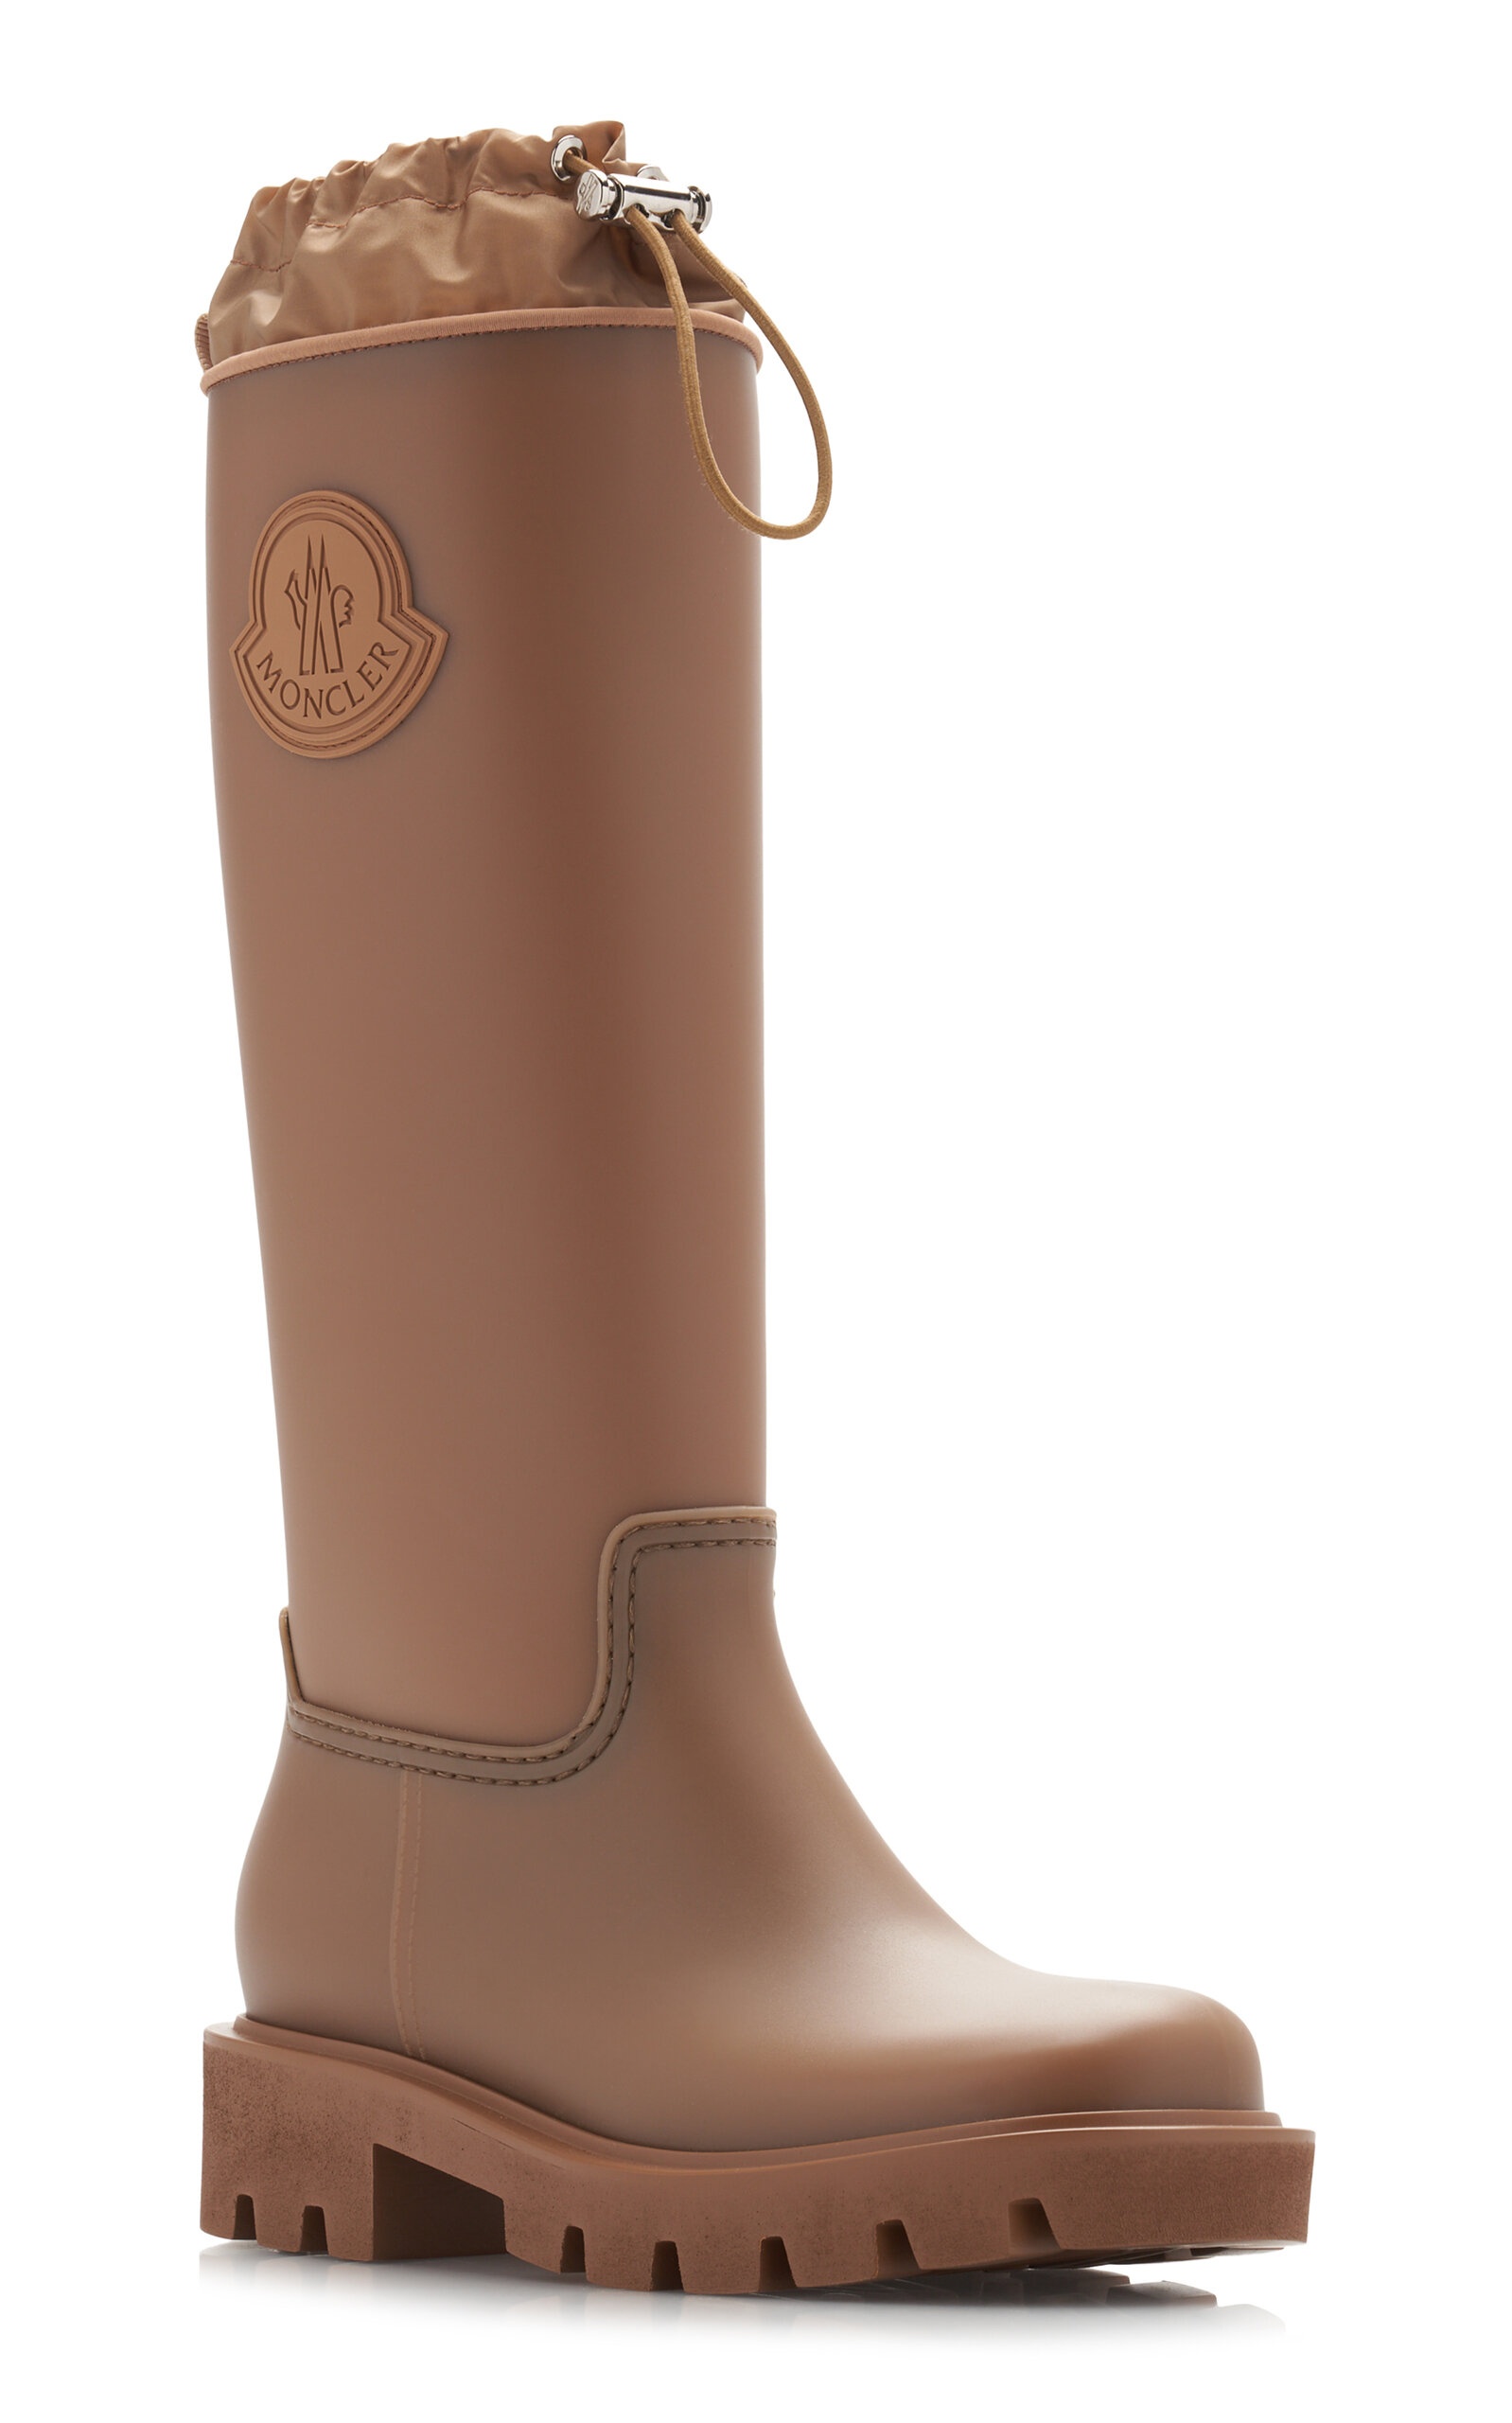 Kickstream Rubber Rain Boots brown - 5